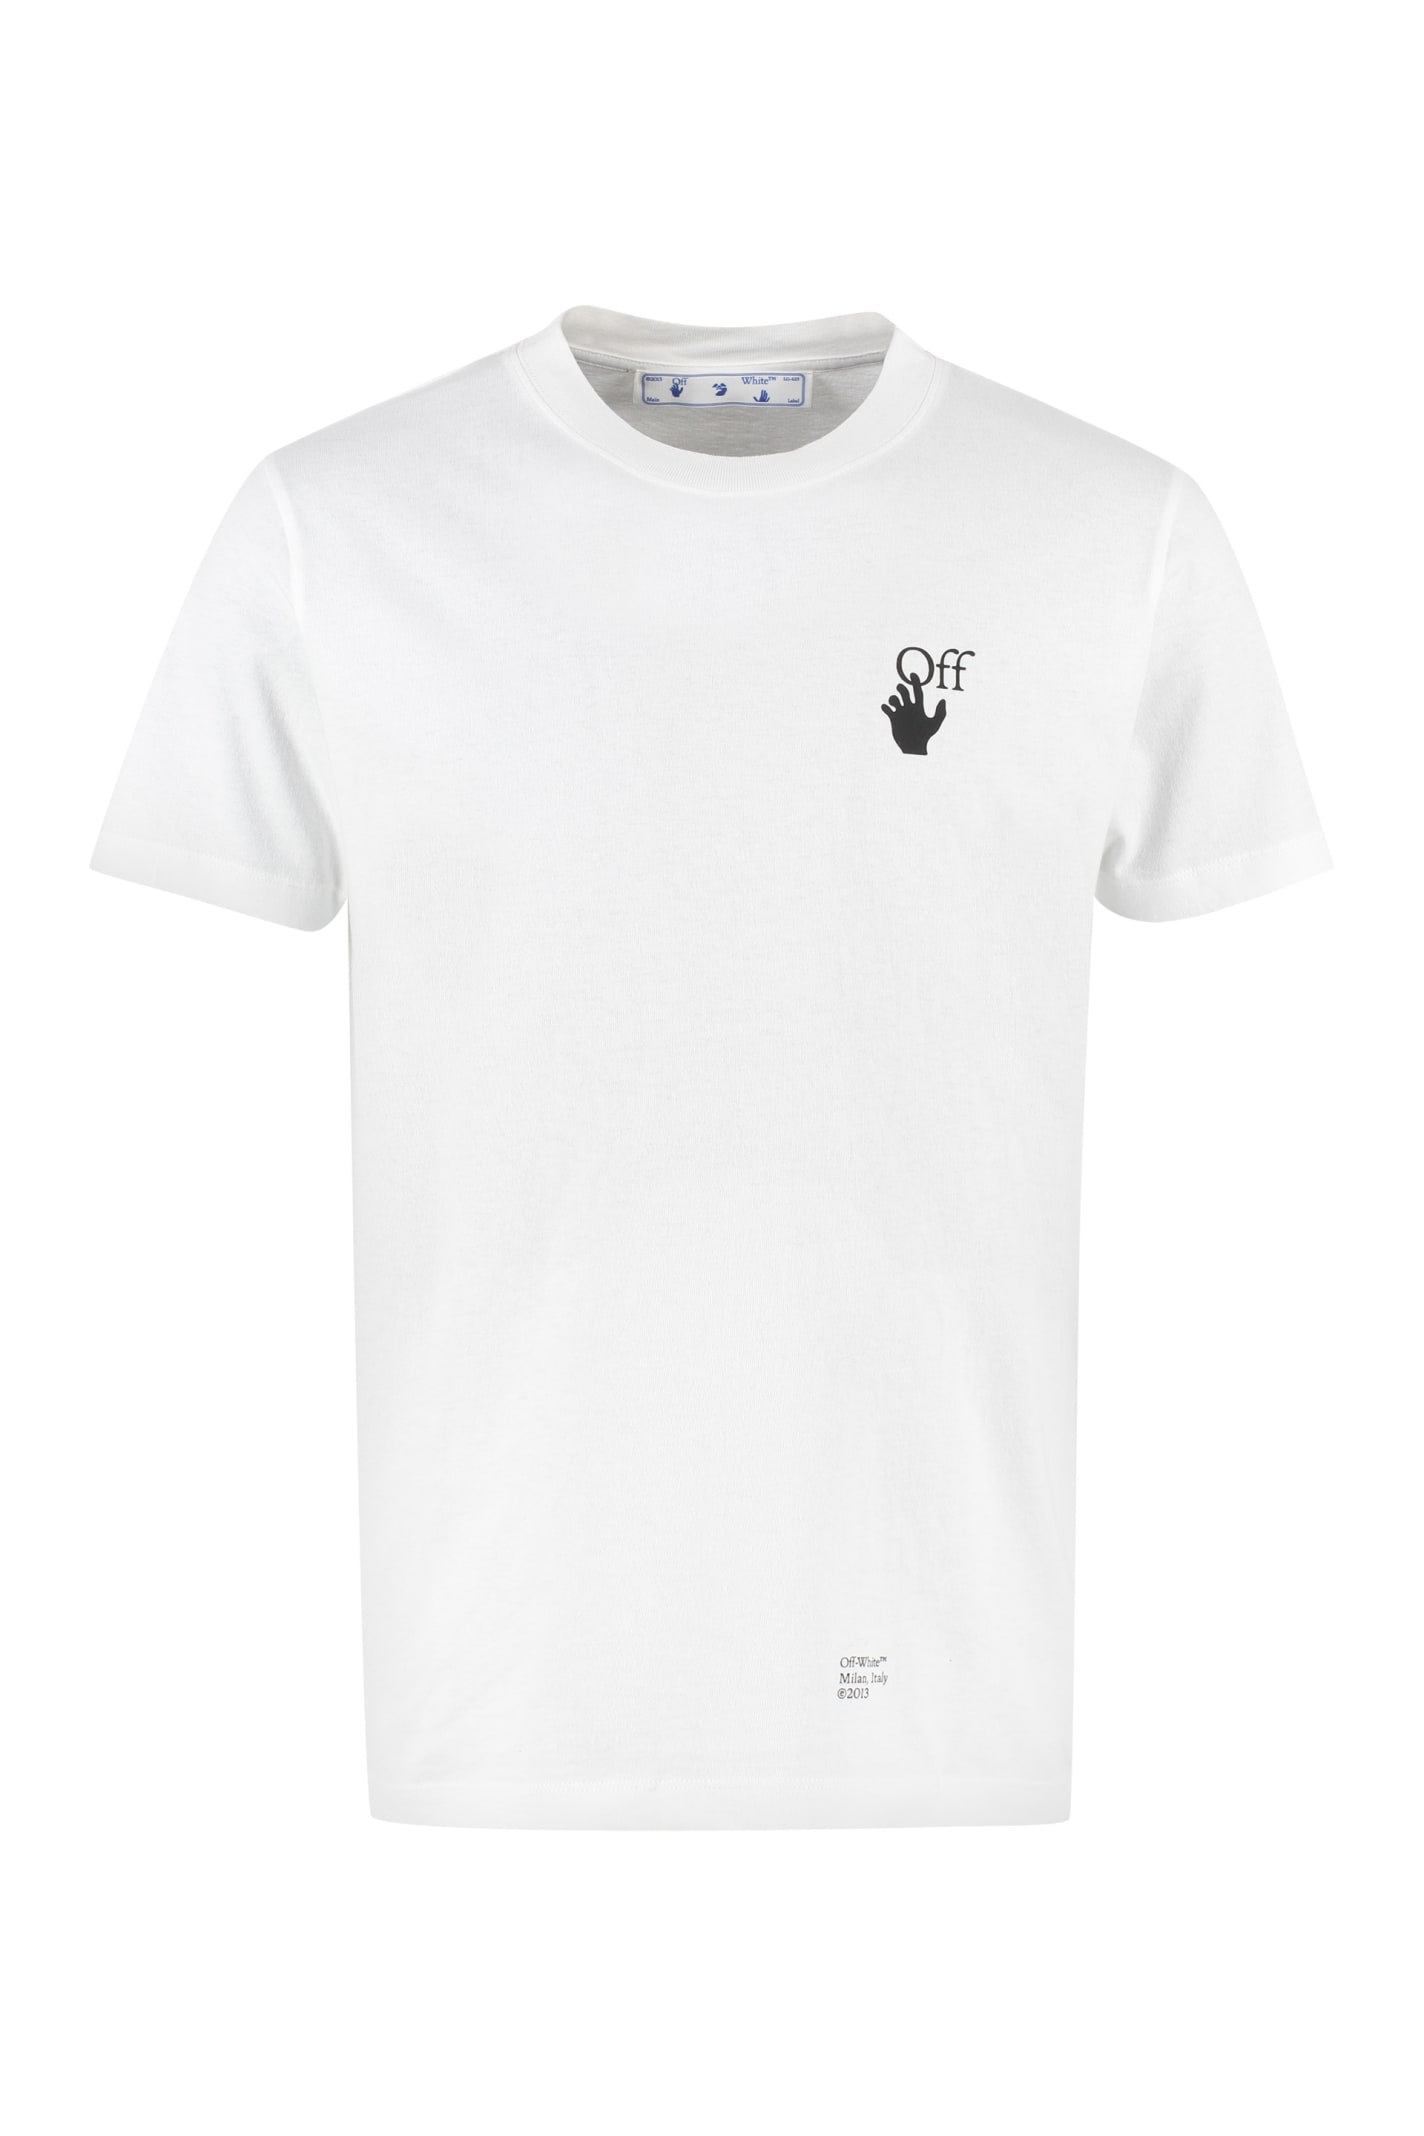 Off-White Printed Slim Fit T-shirt